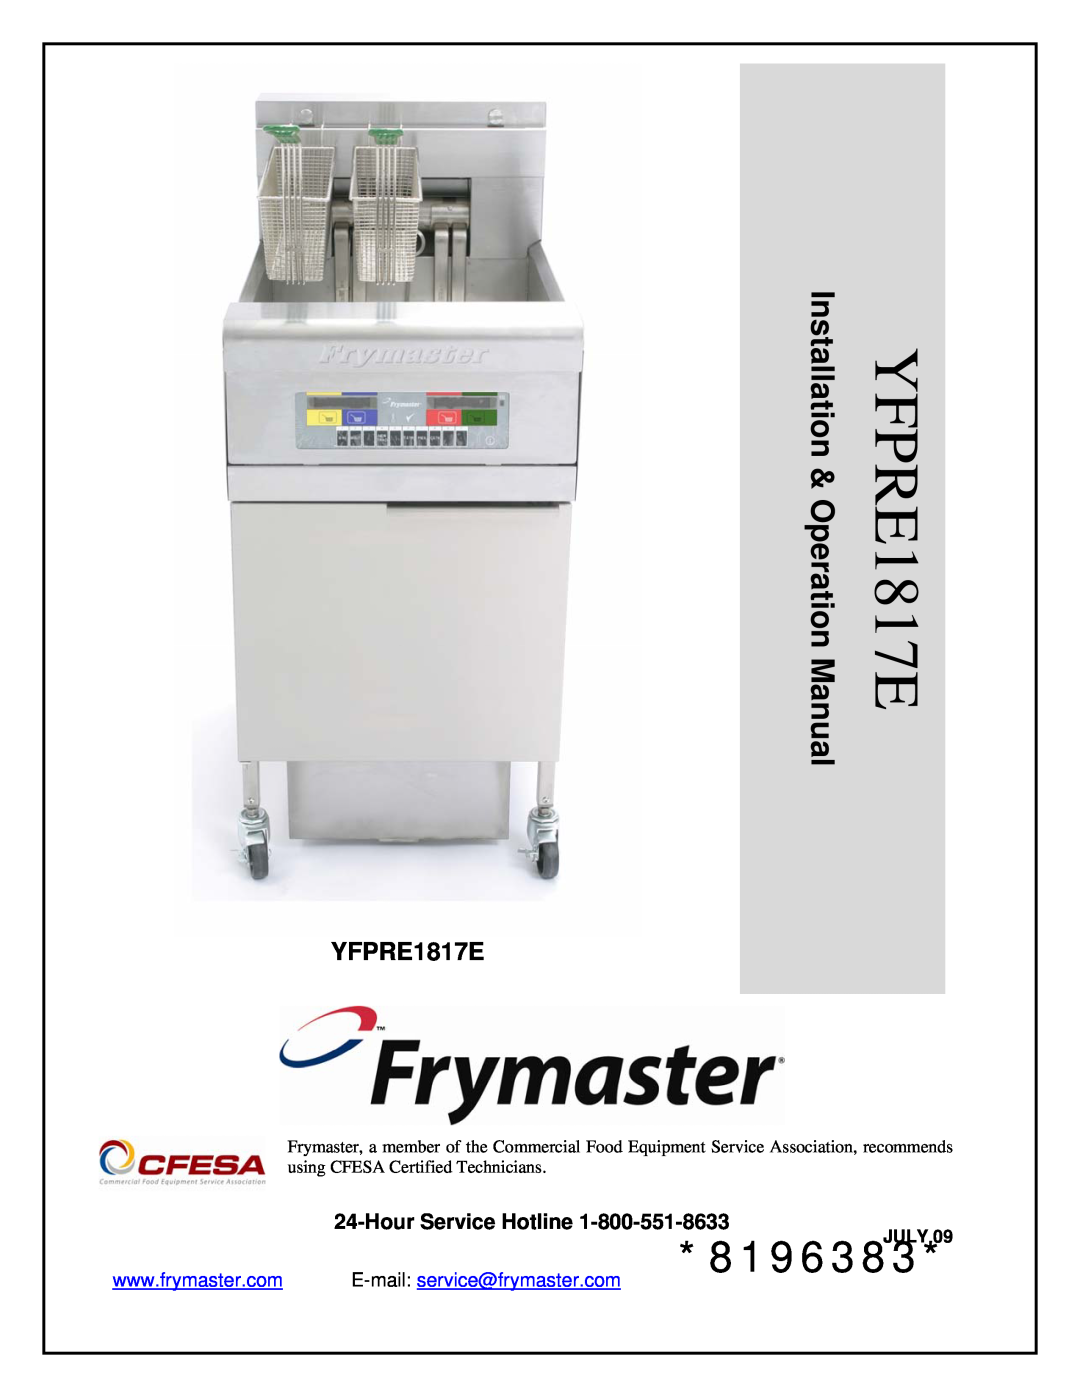 Frymaster YFPRE1817E operation manual 8196383, E-mail service@frymaster.com, July 